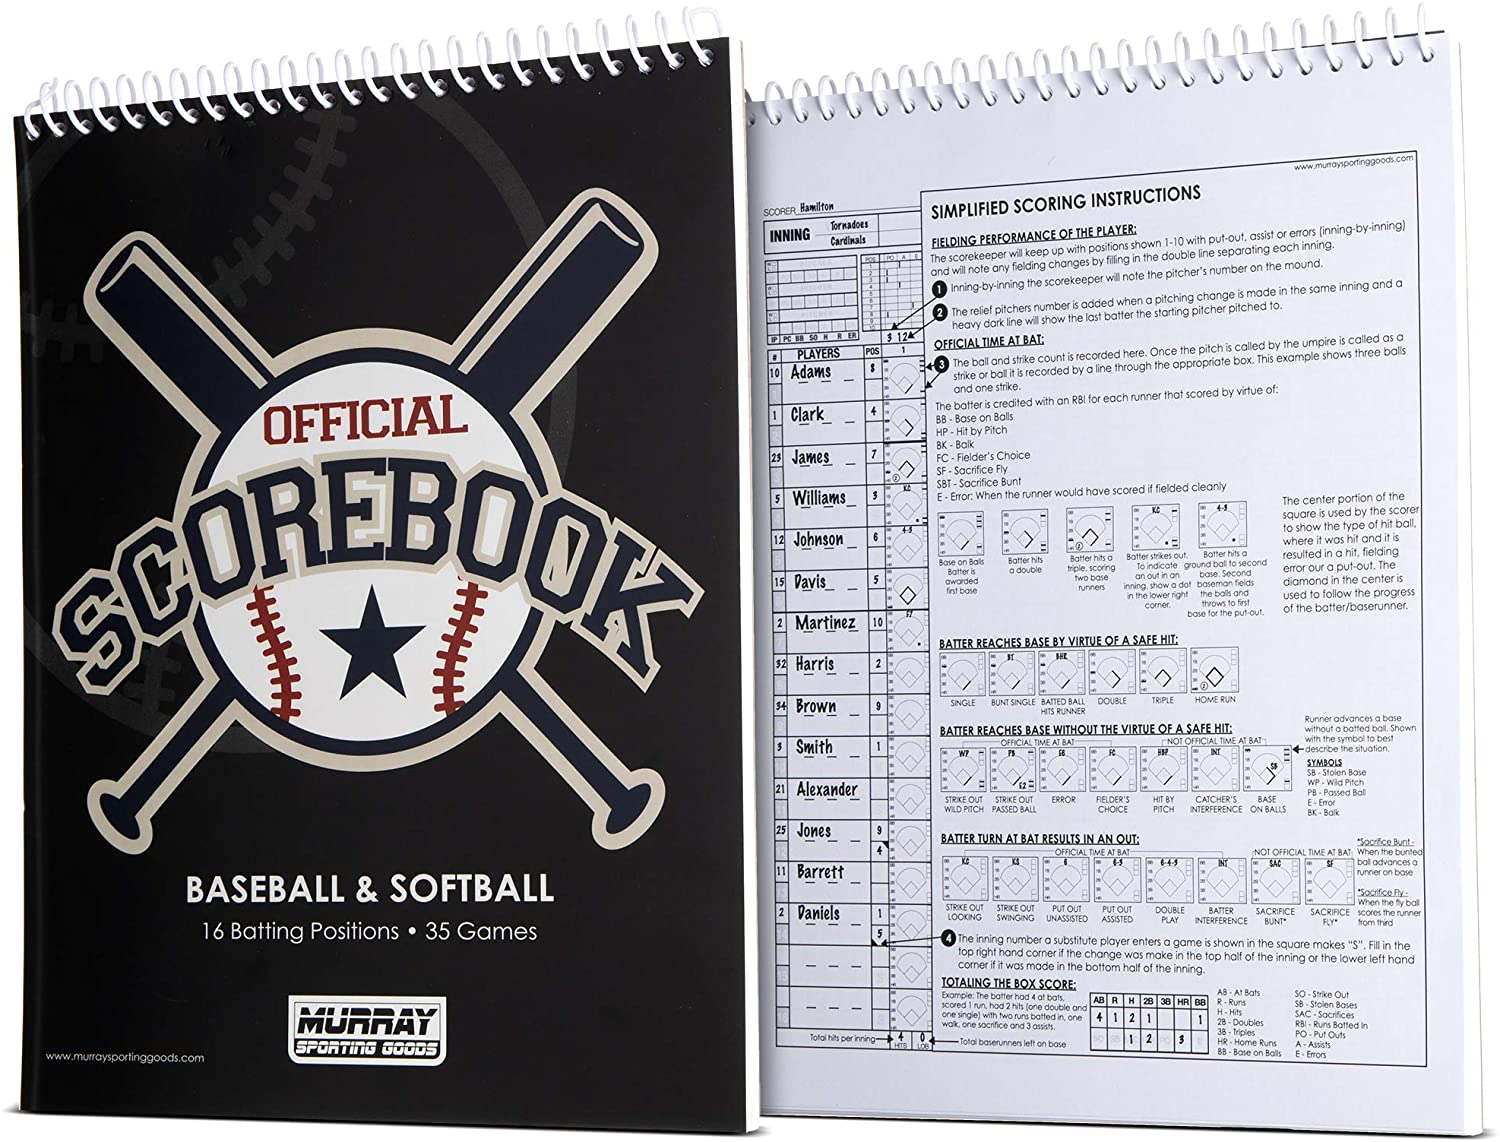 The Murray Sporting Goods Baseball and Softball official scorebook.